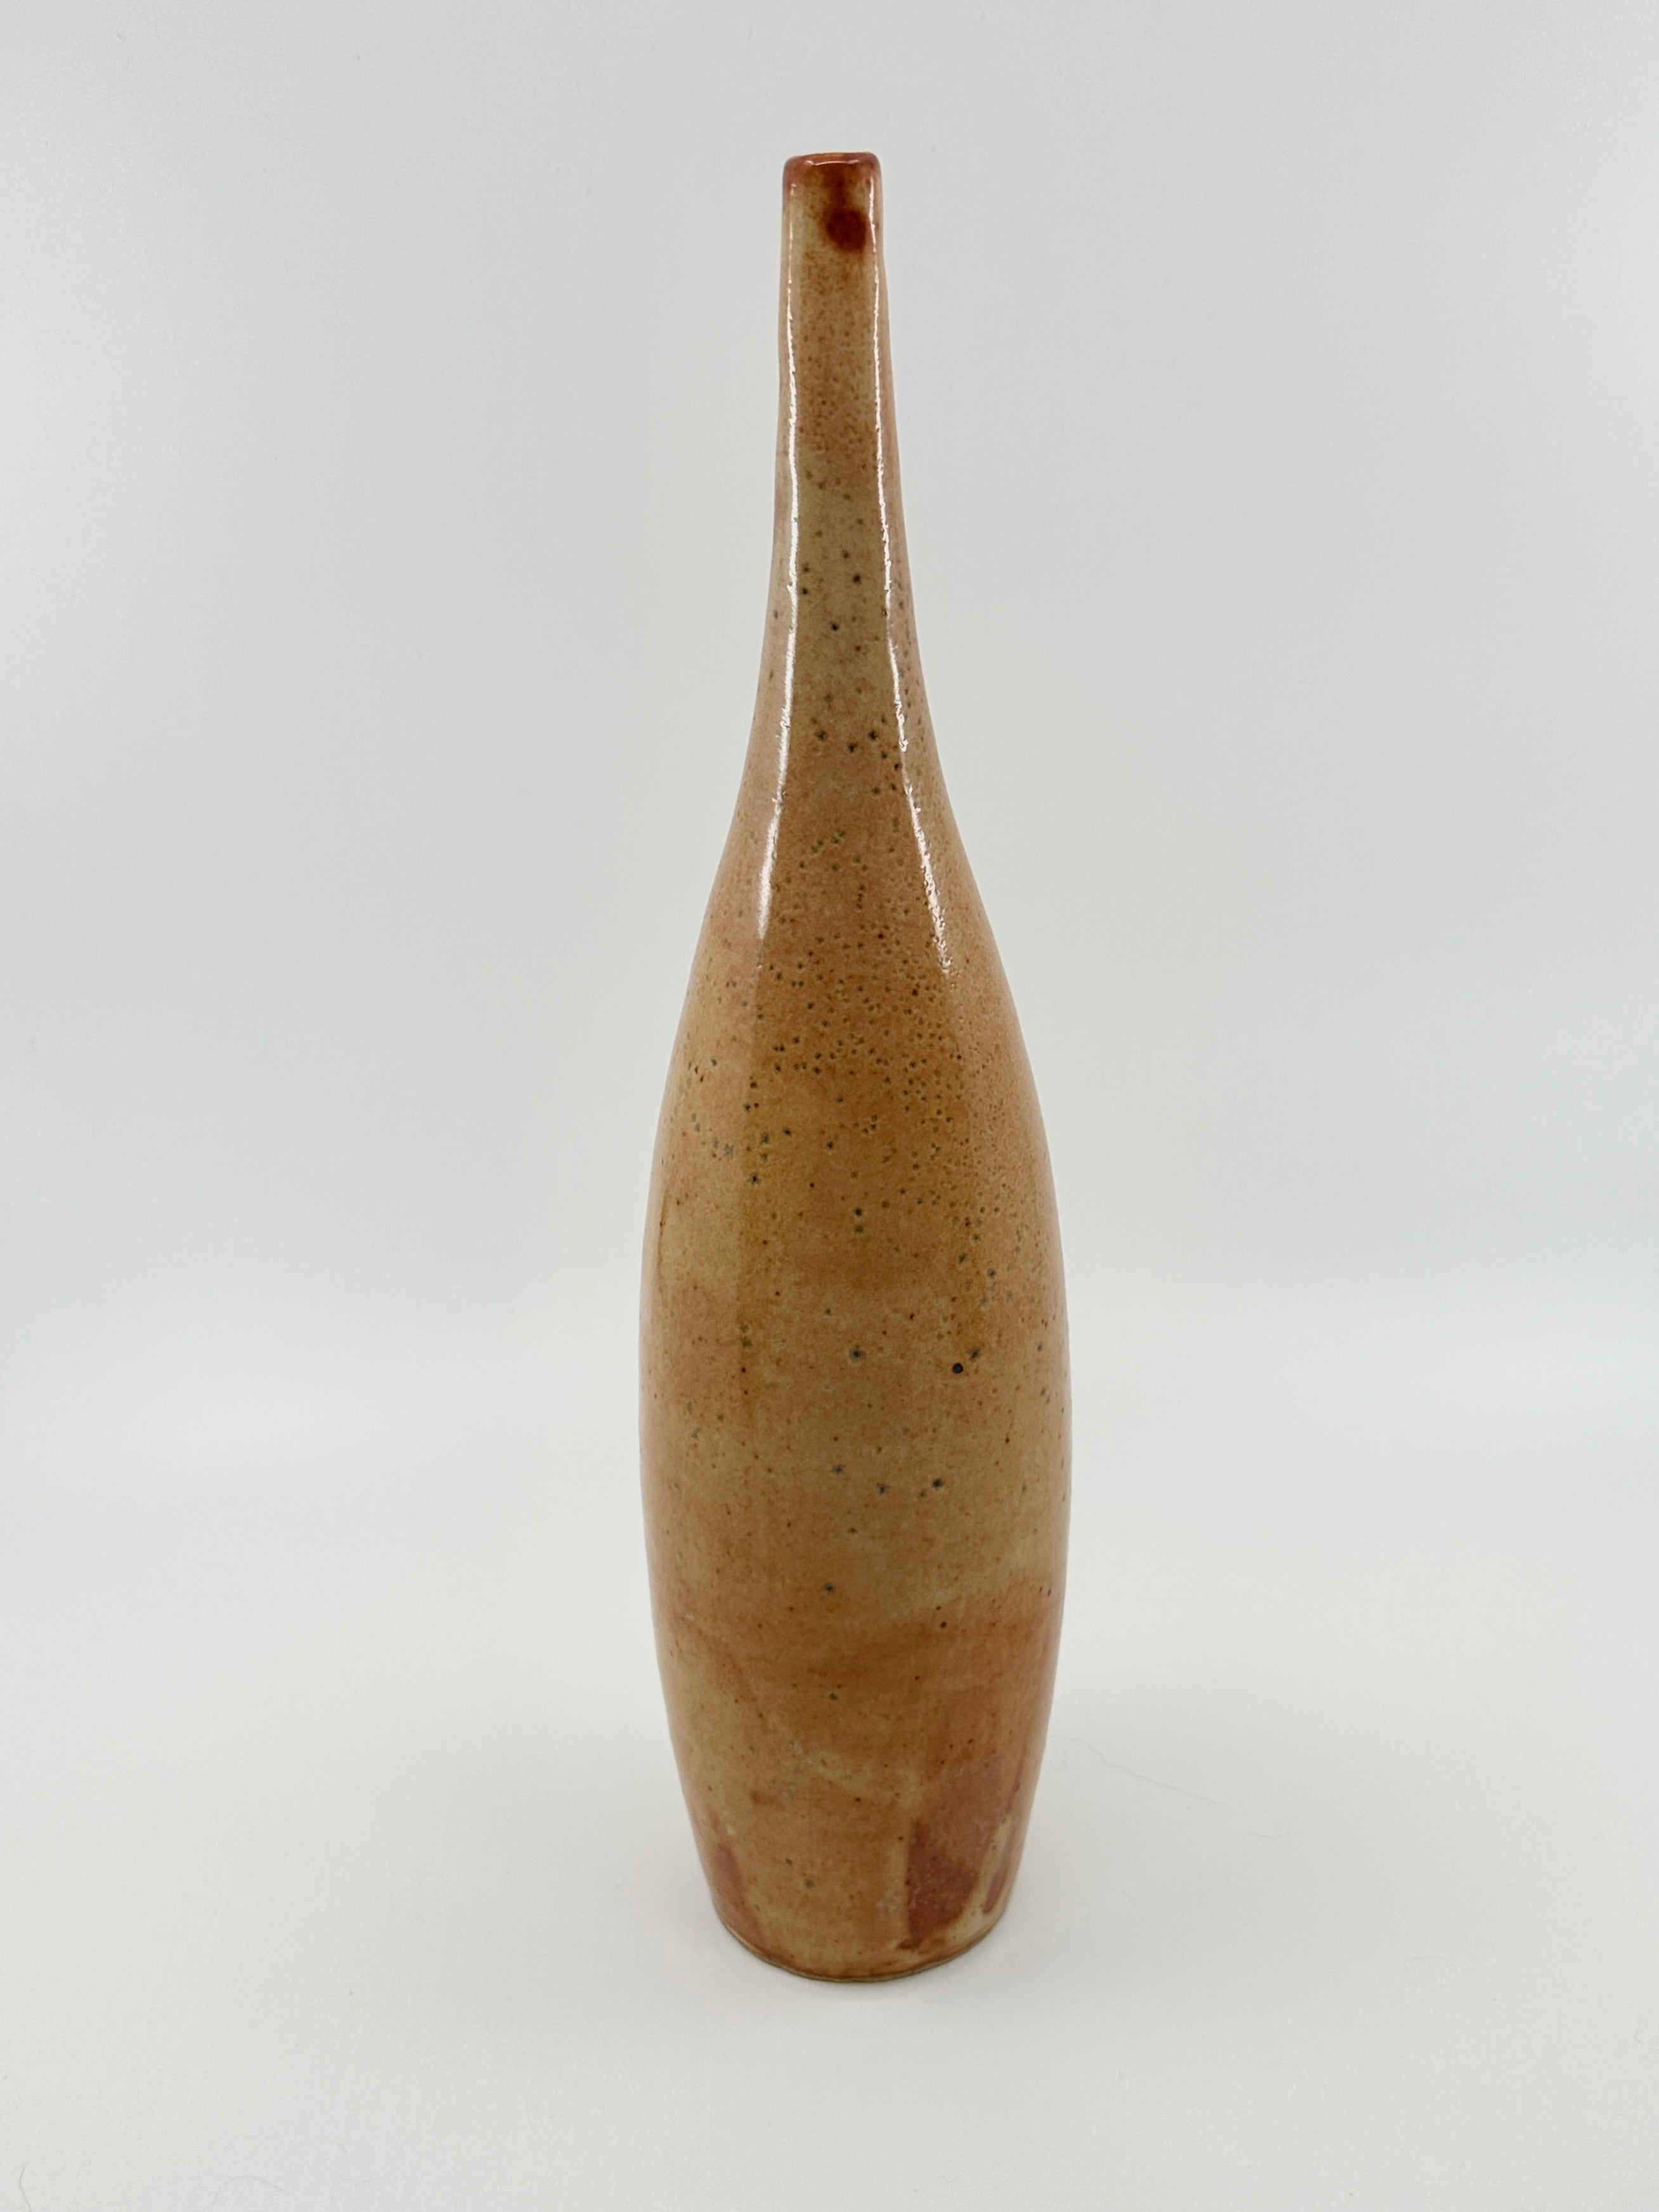 Shino tall rustic bottle No. 15